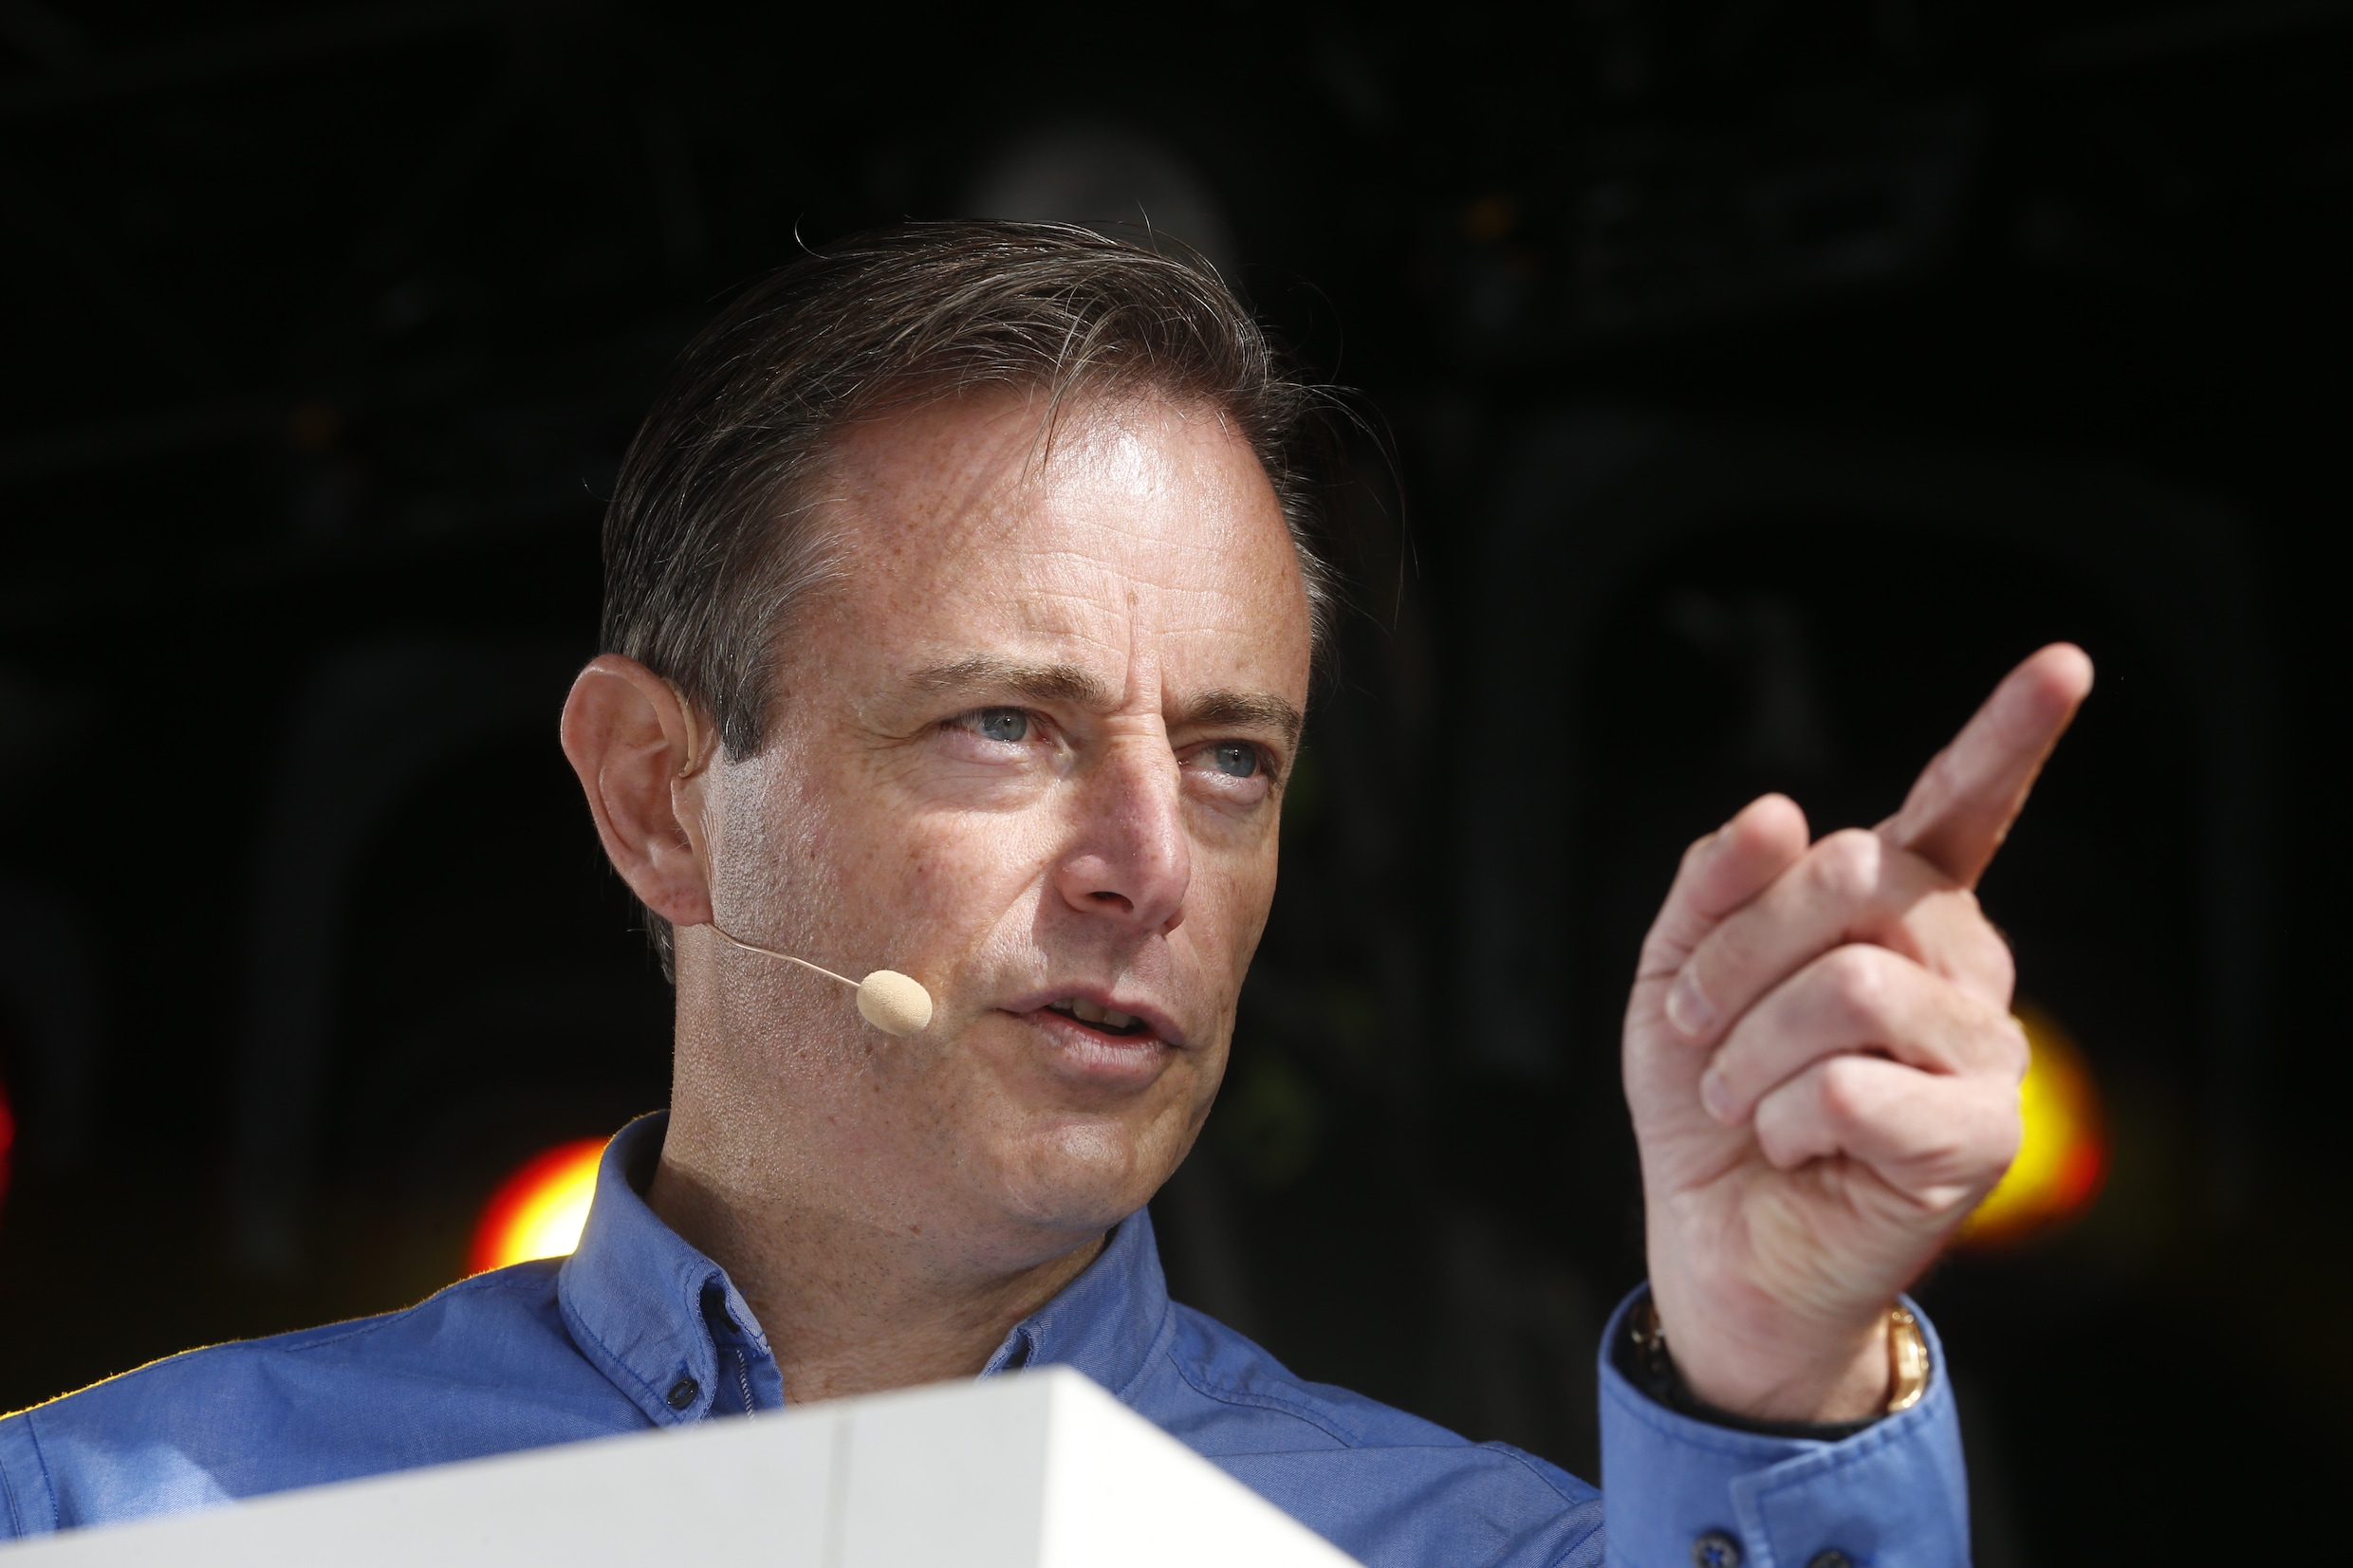 De Wever prijst Merkel om "rechtzetting" van 'Wir schaffen das'